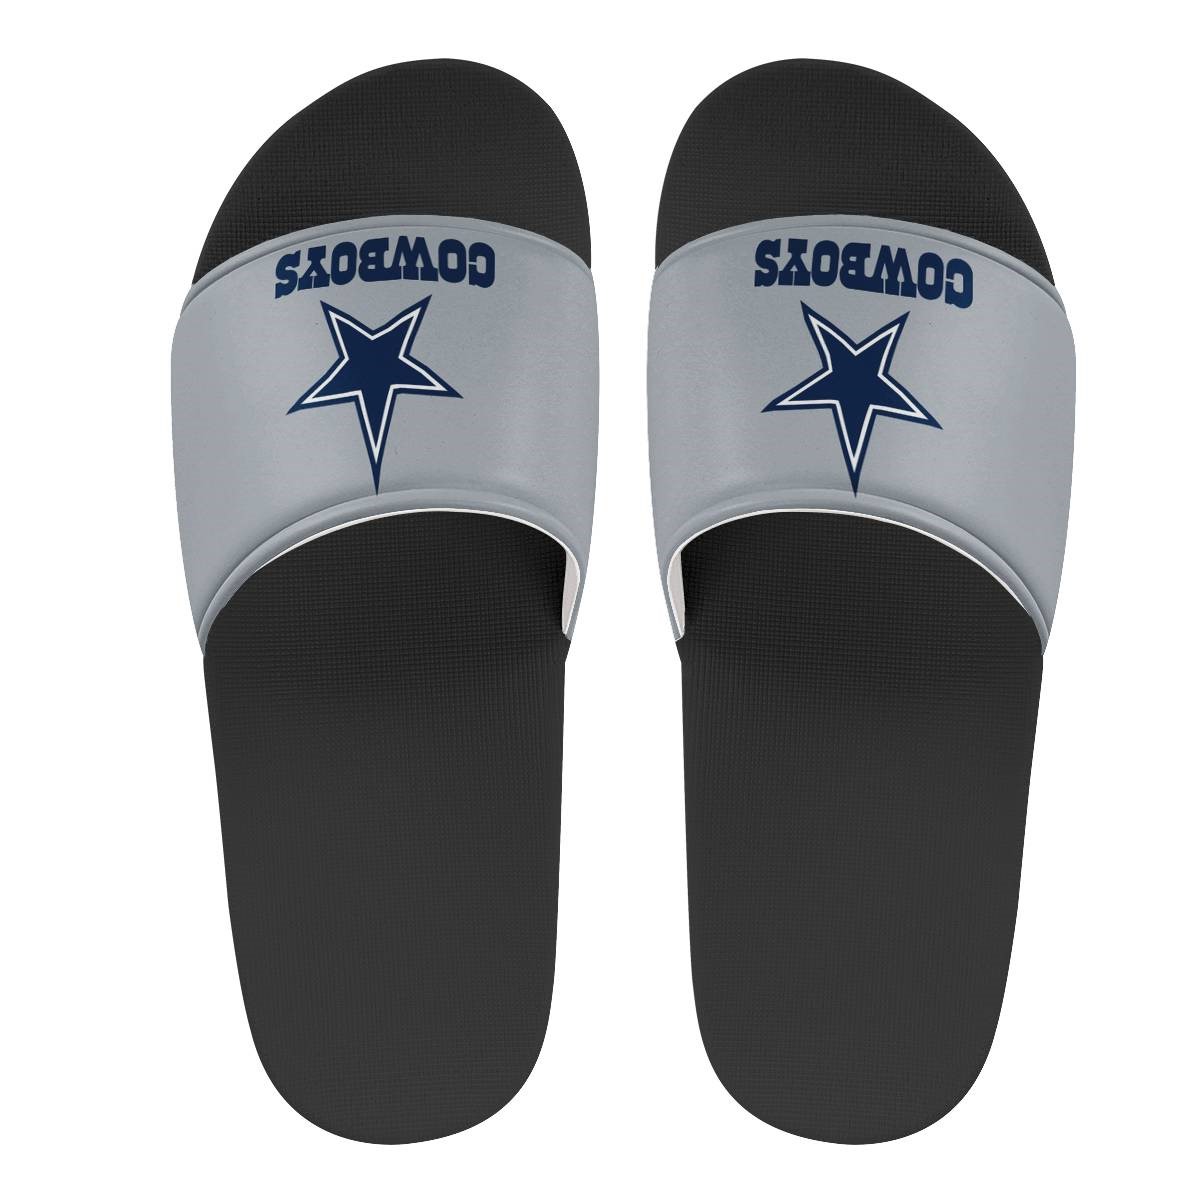 Women's Dallas Cowboys Flip Flops 002